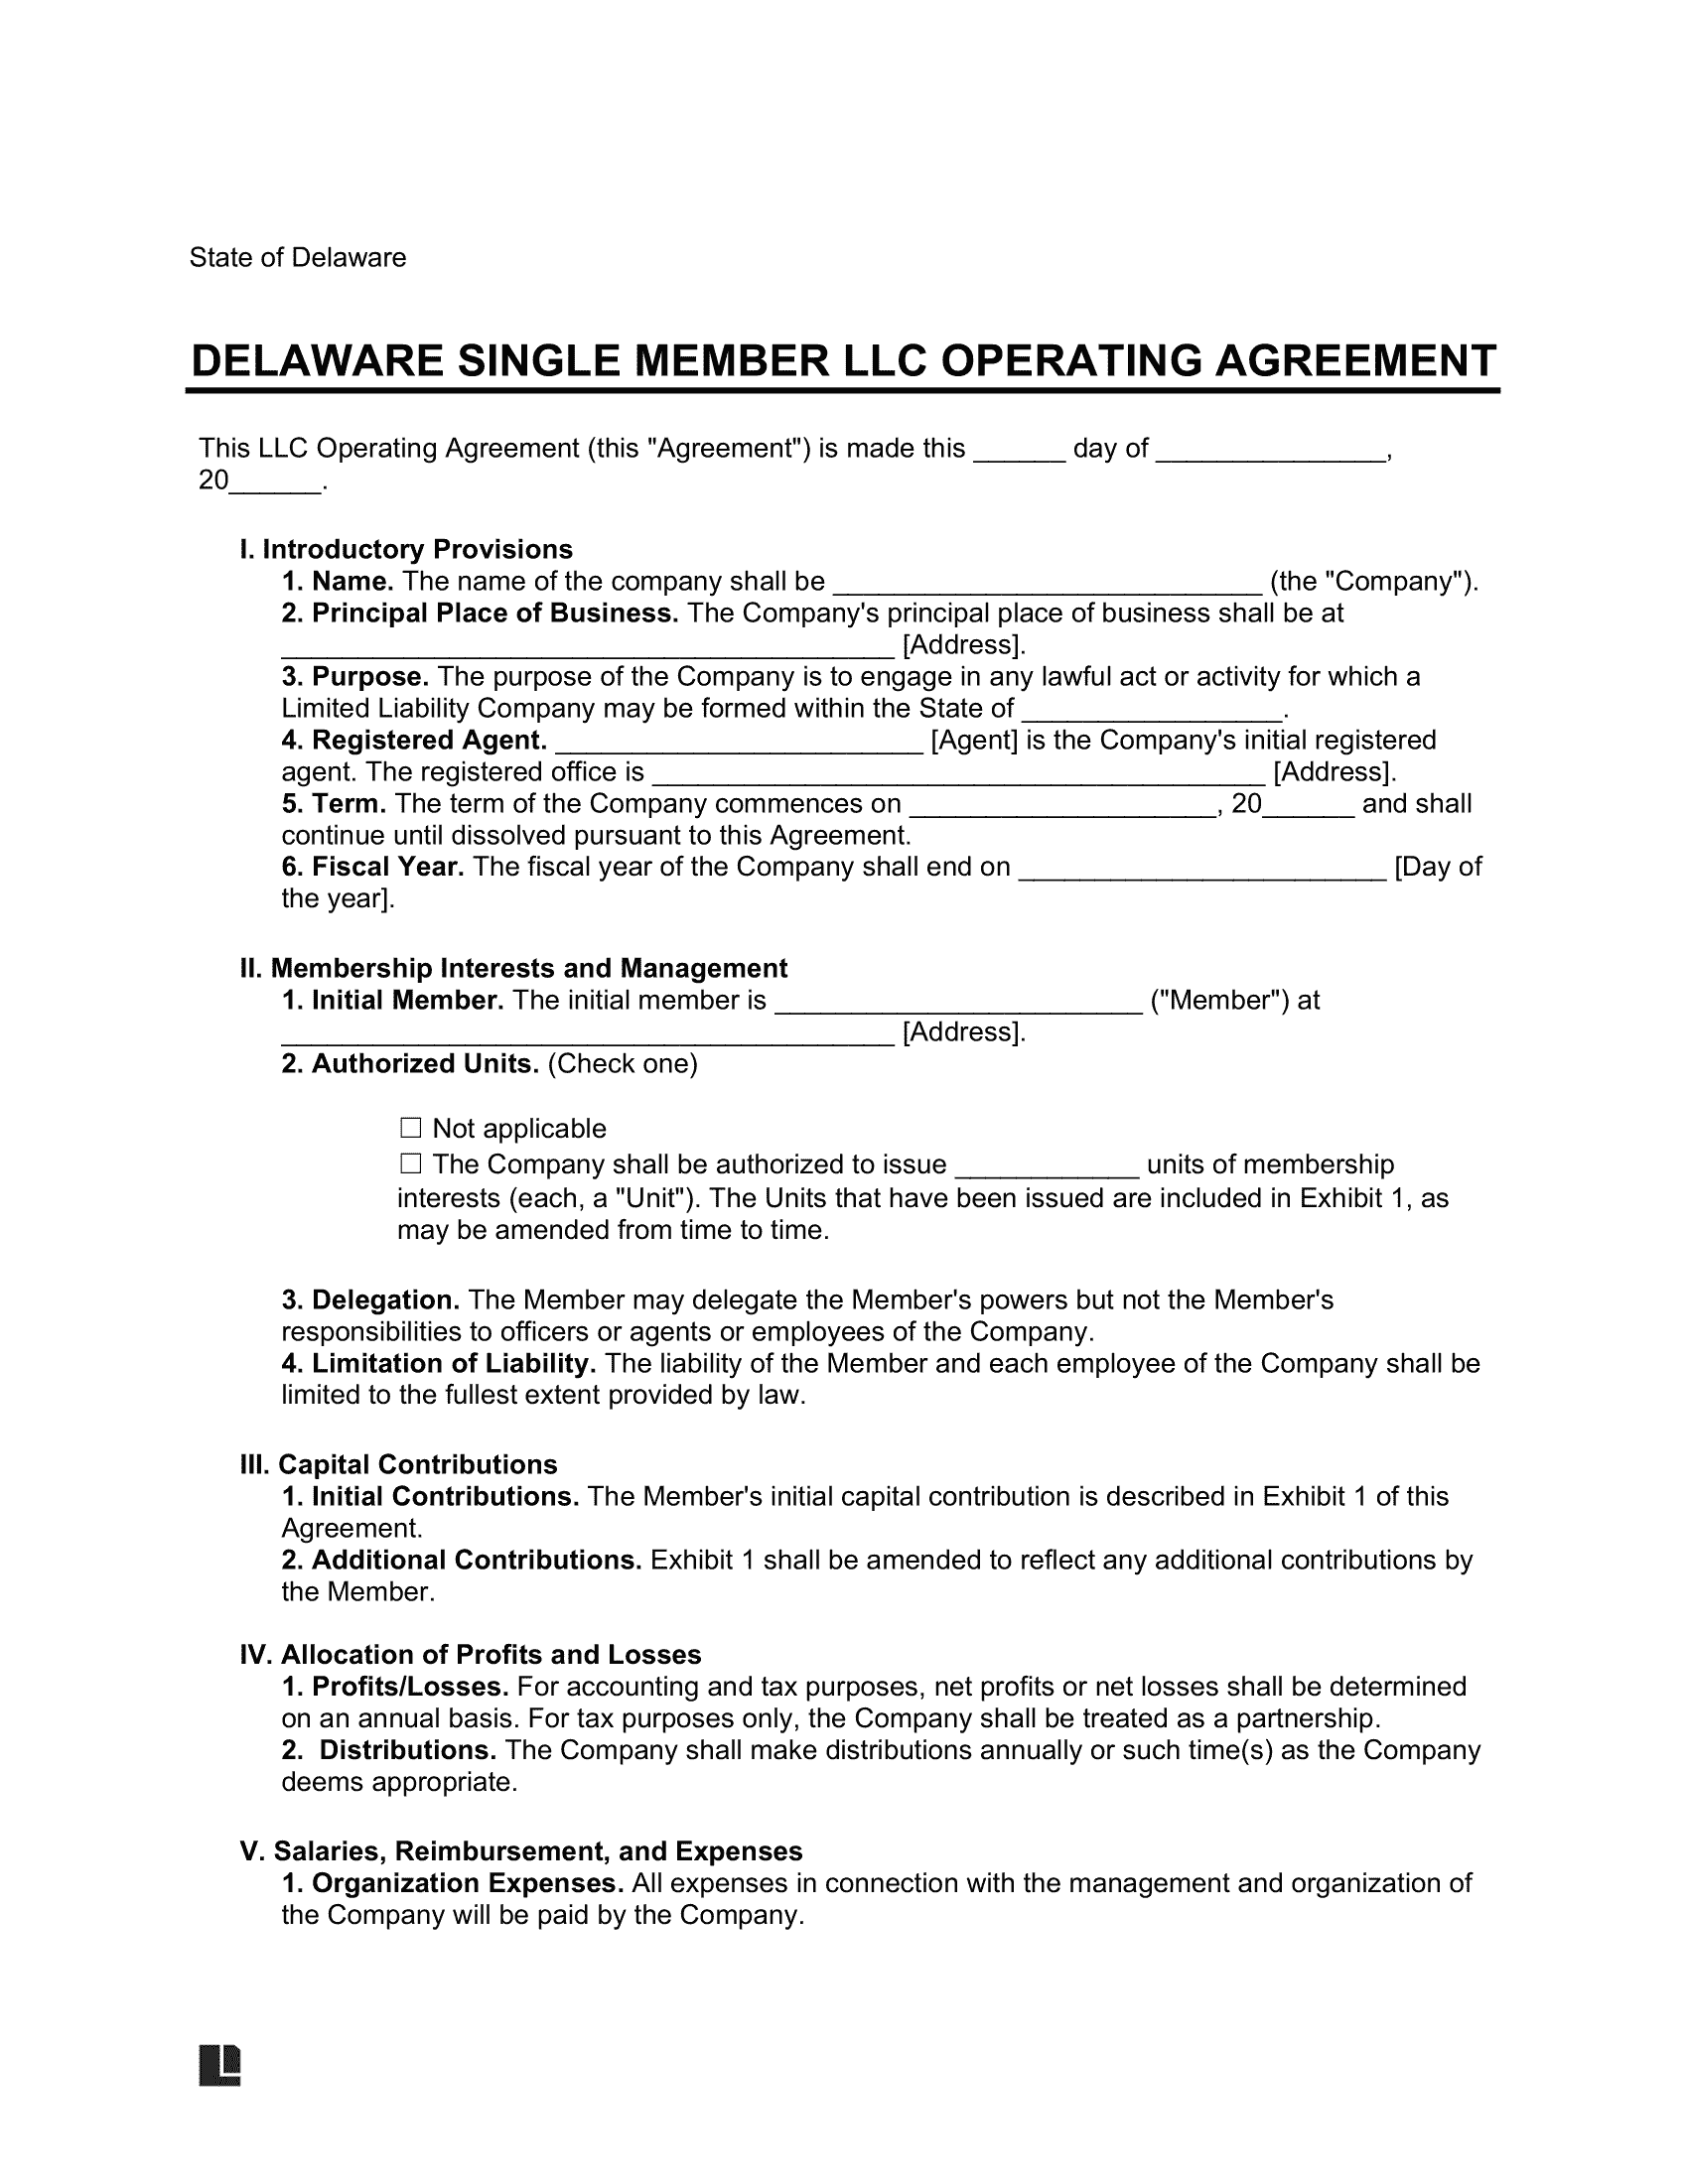 Delaware Single Member LLC Operating Agreement Form